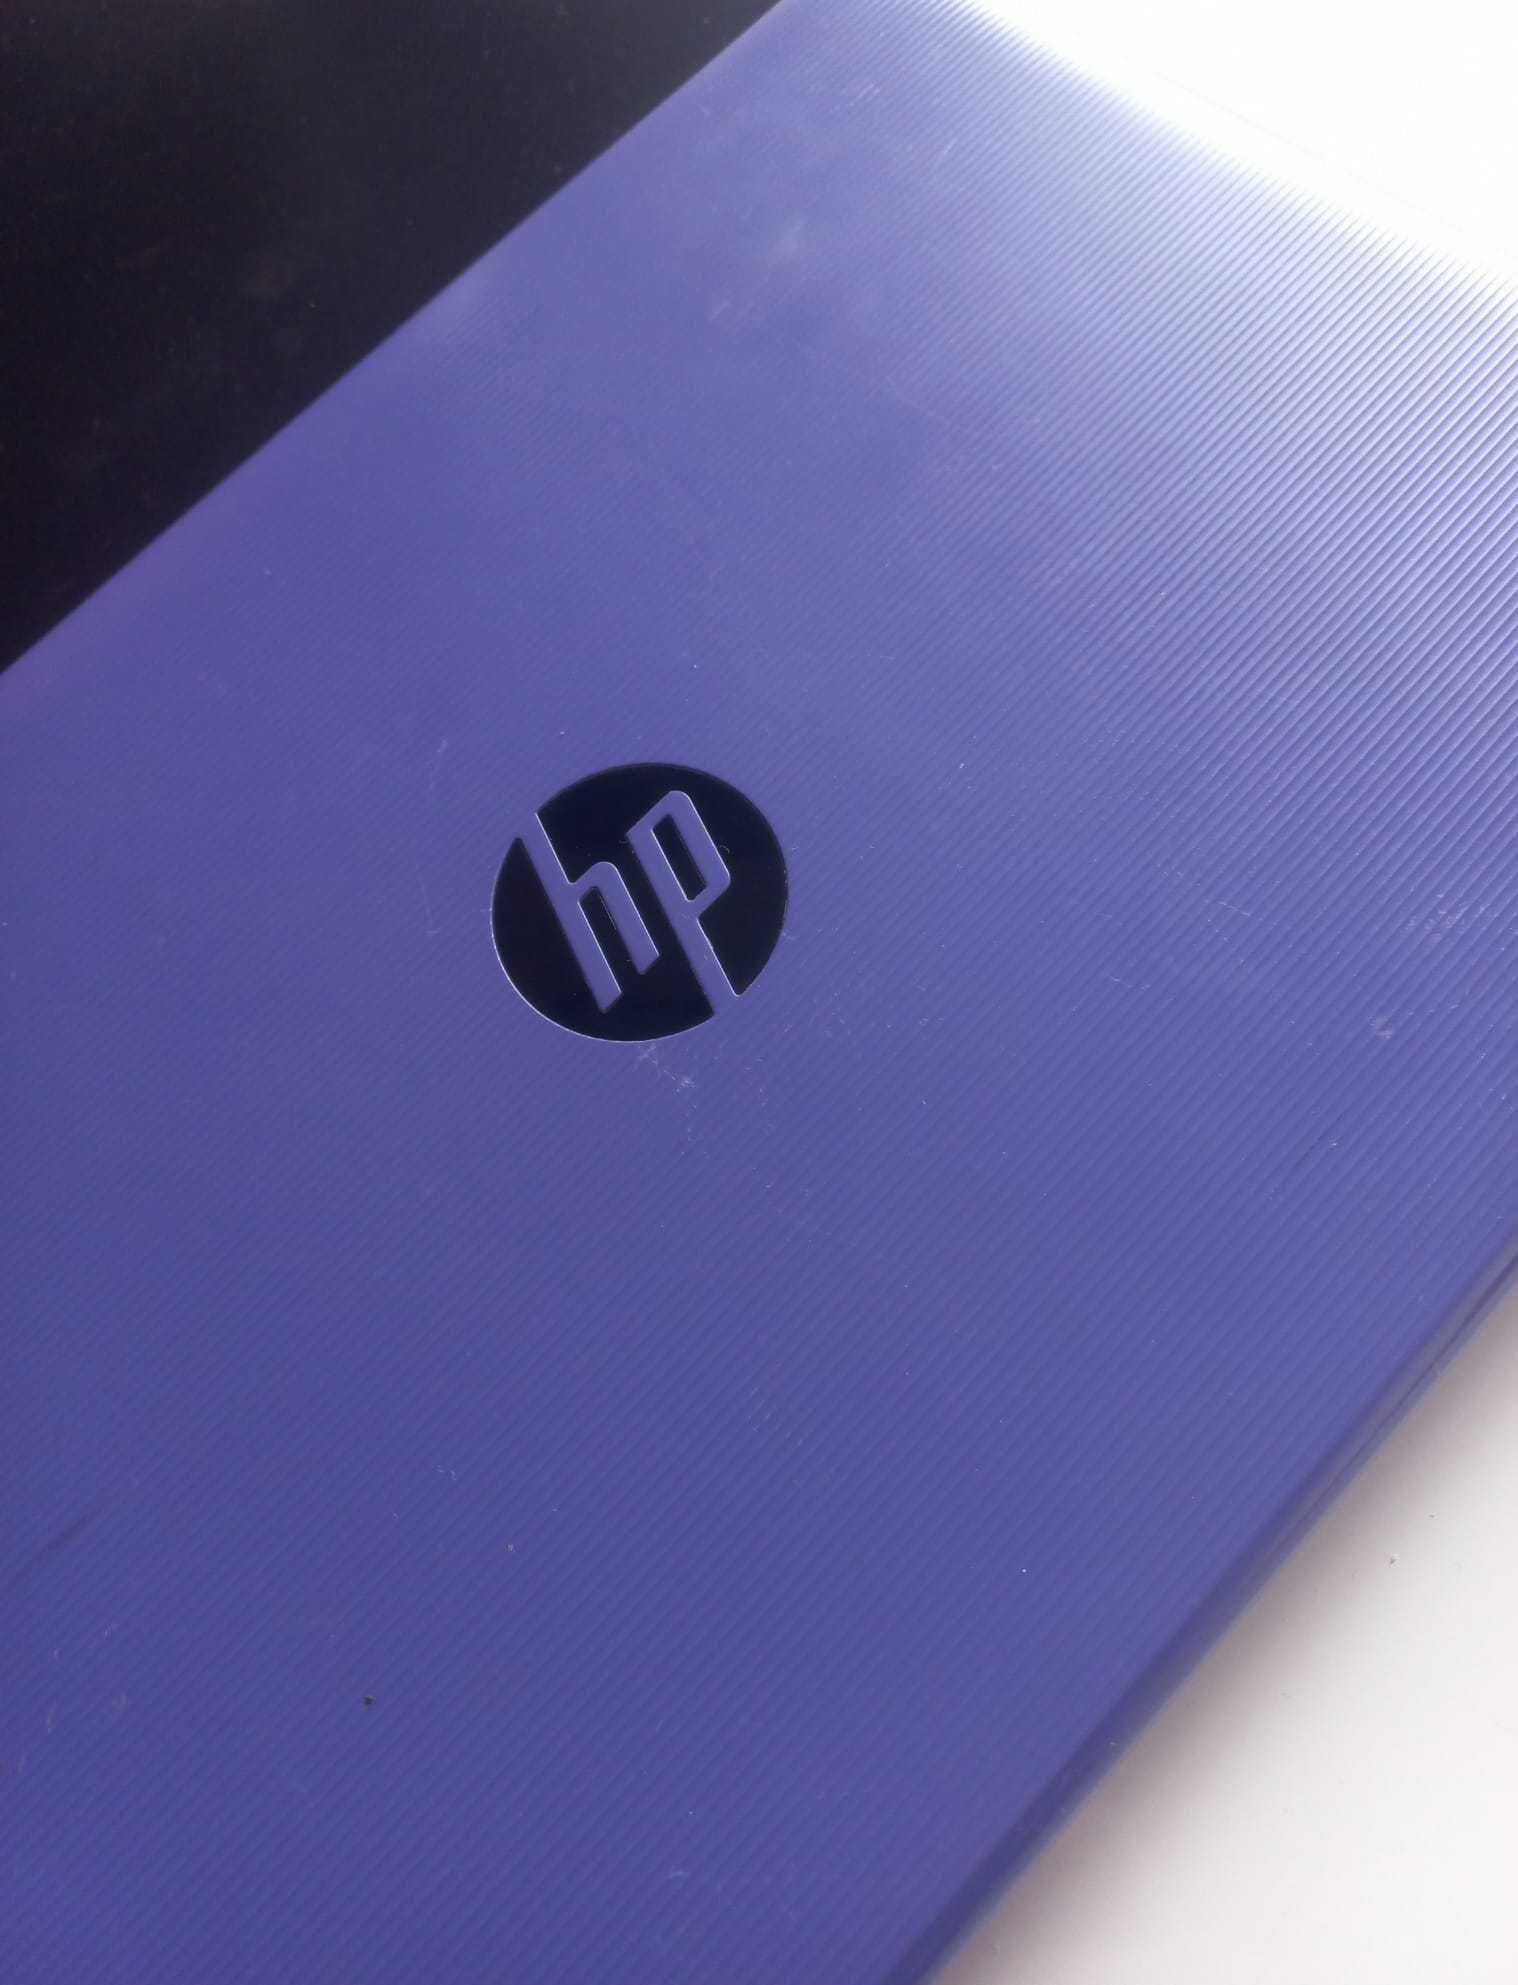 HP Stream 11-r003np (Púrpura Violeta) semi novo !!!